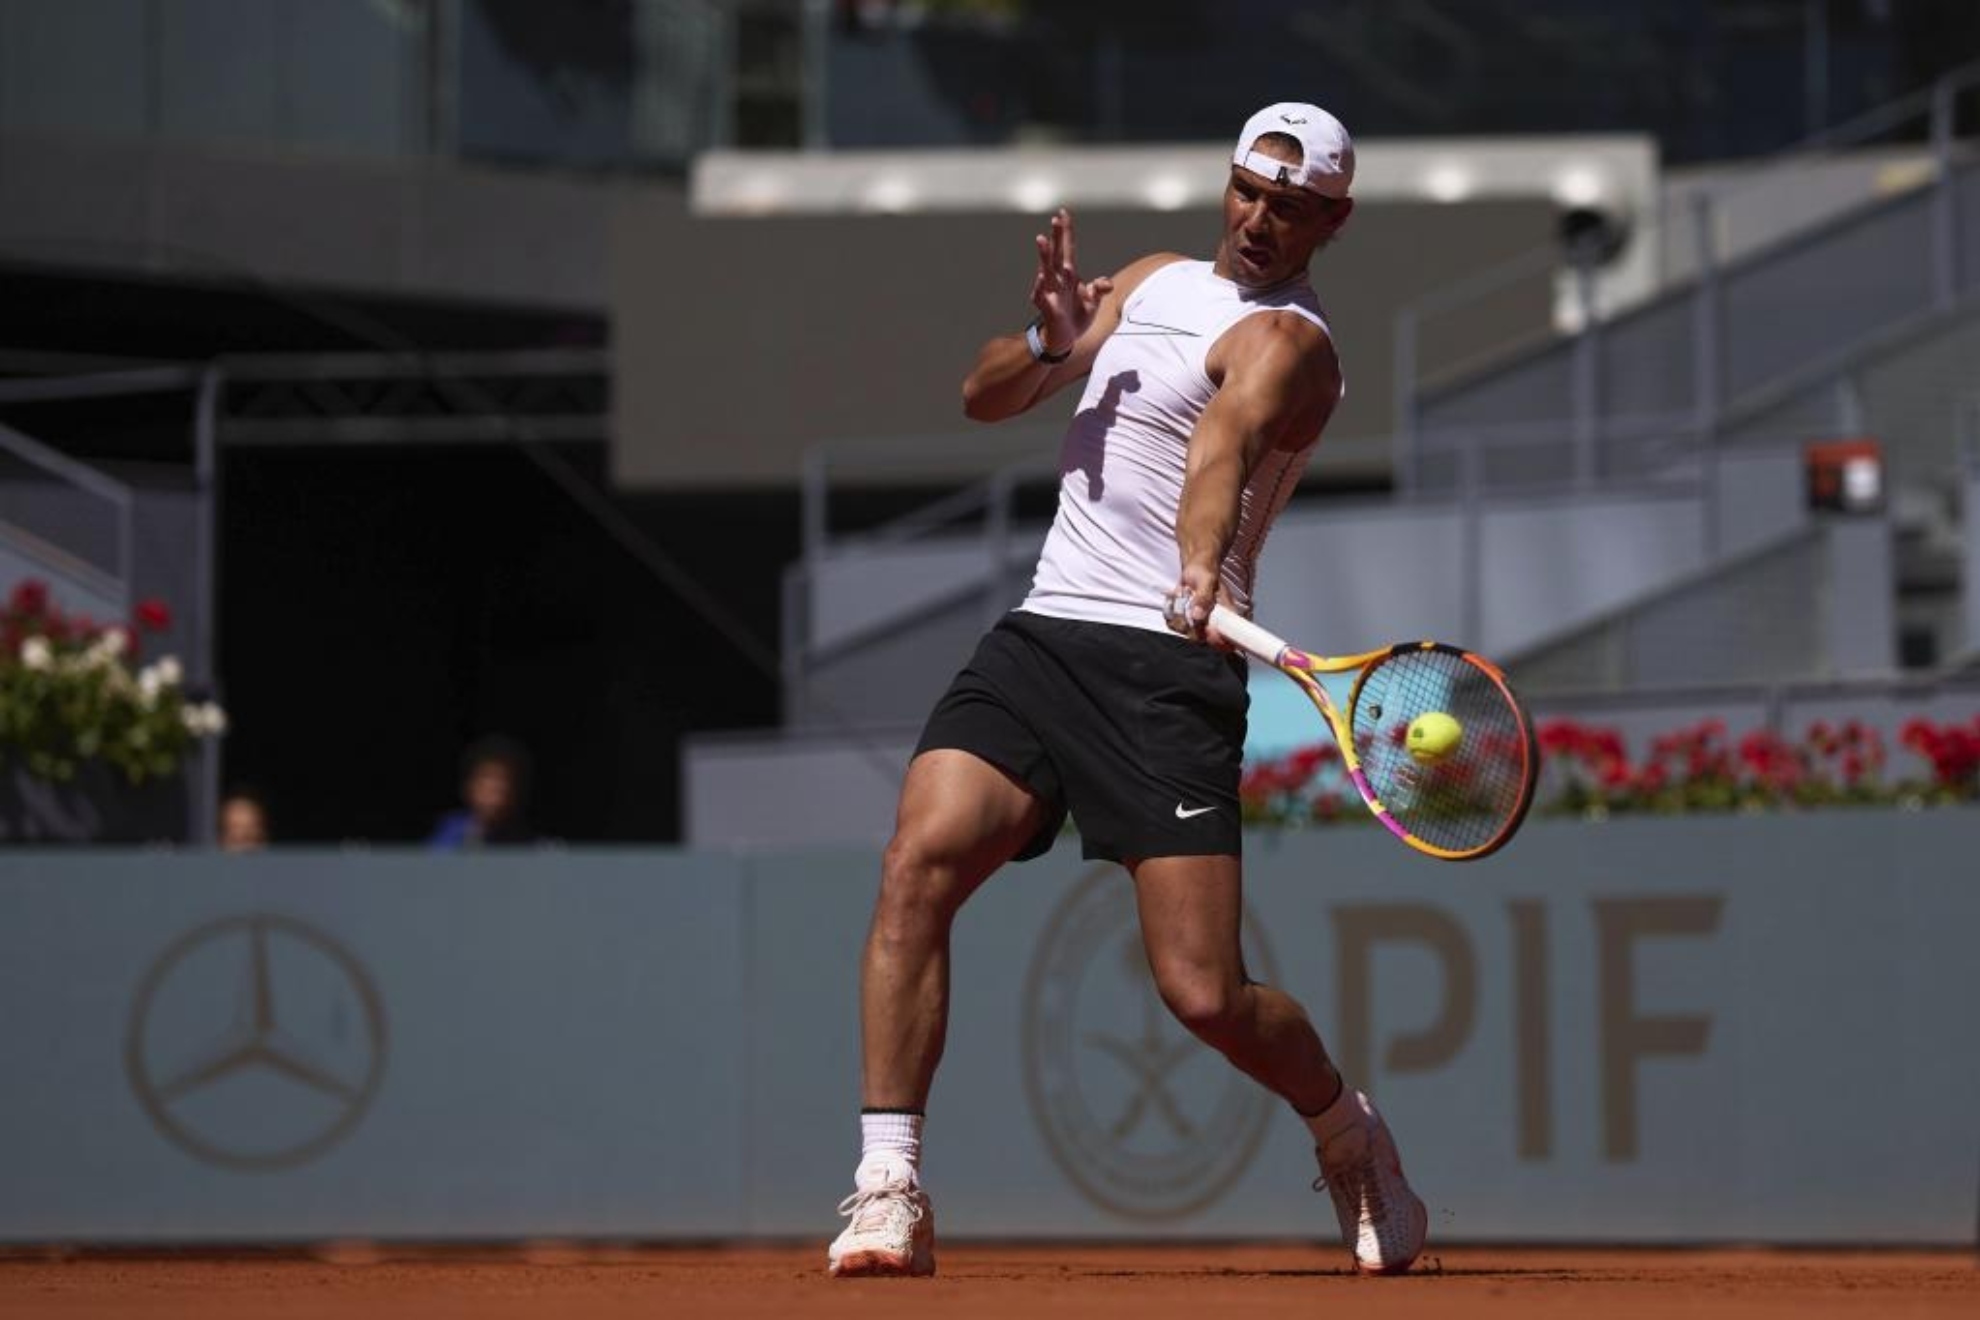 Nadal - Blanch: a qu� hora es y d�nde ver en TV el partido del Mutua Madrid Open en directo